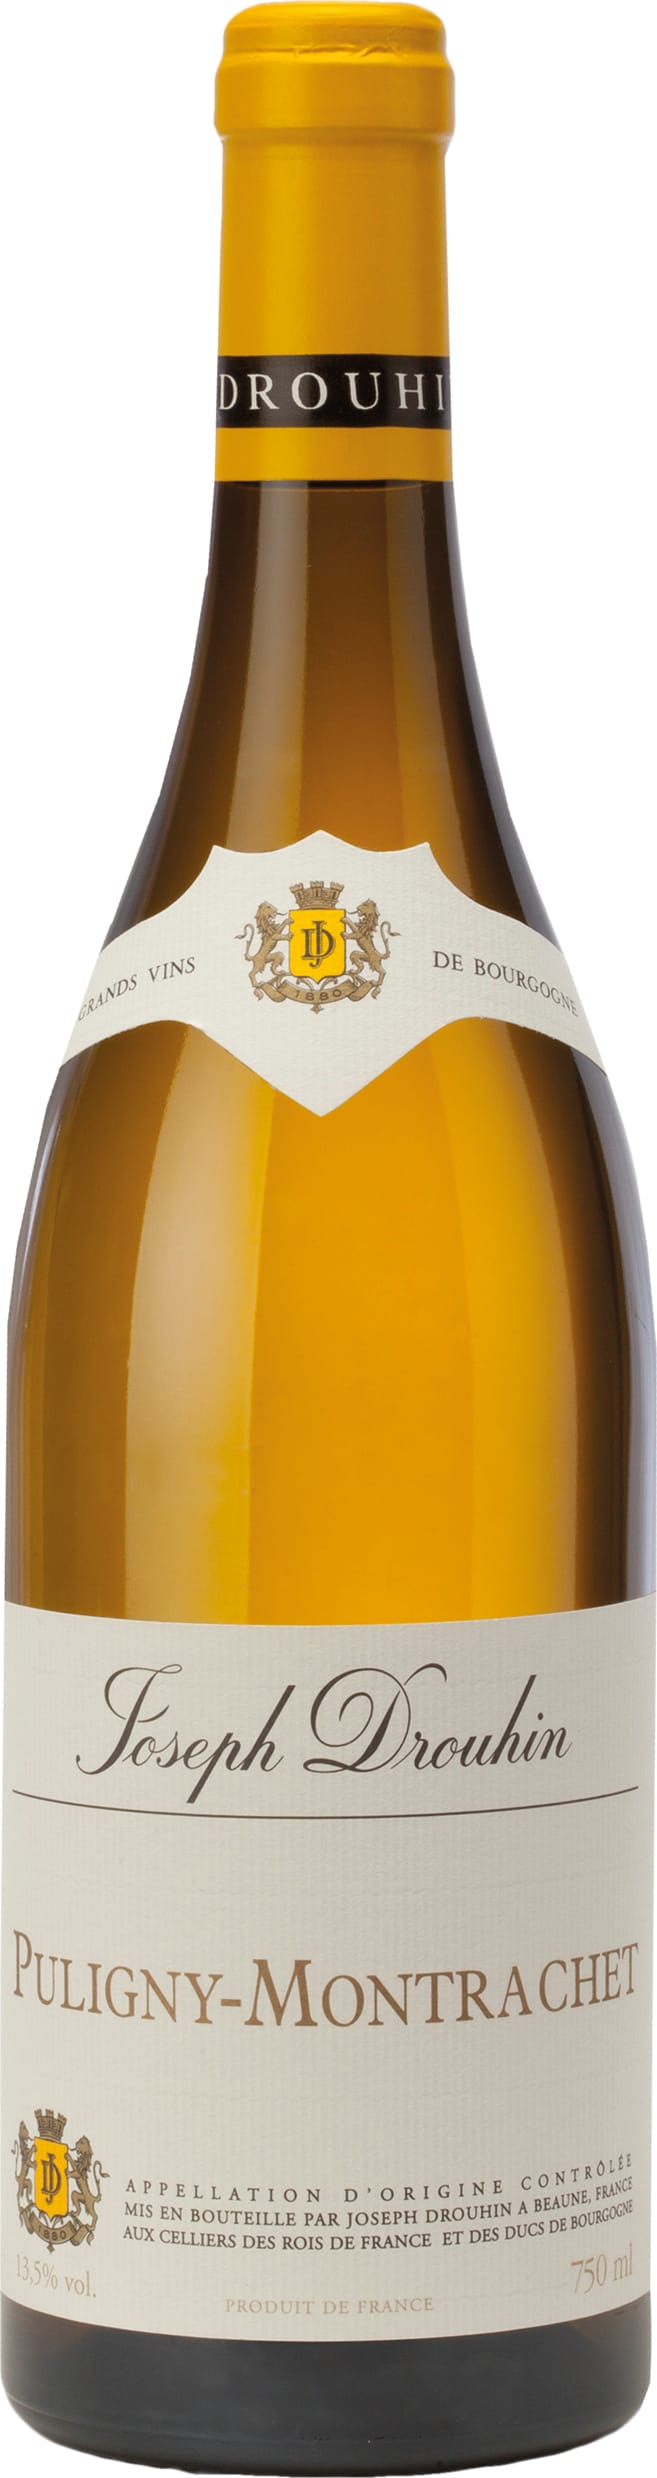 Joseph Drouhin Puligny-Montrachet 2020 75cl - Buy Joseph Drouhin Wines from GREAT WINES DIRECT wine shop